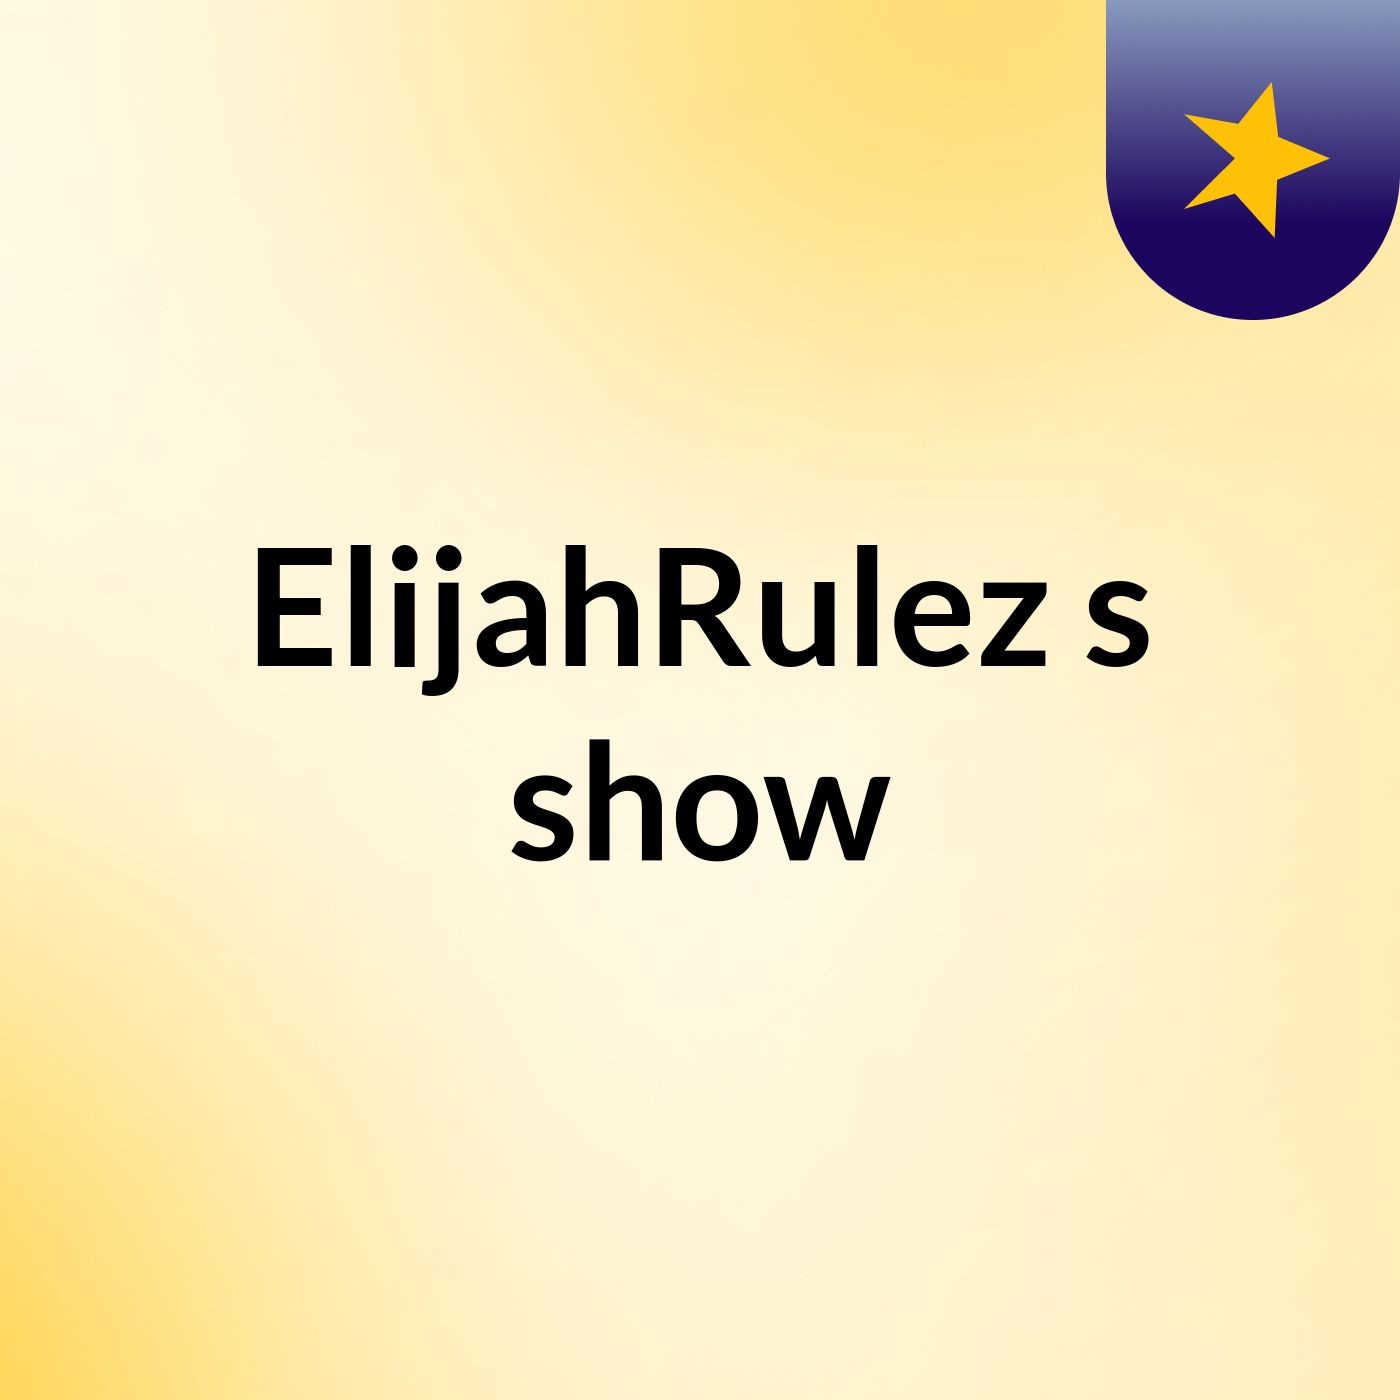 ElijahRulez's show